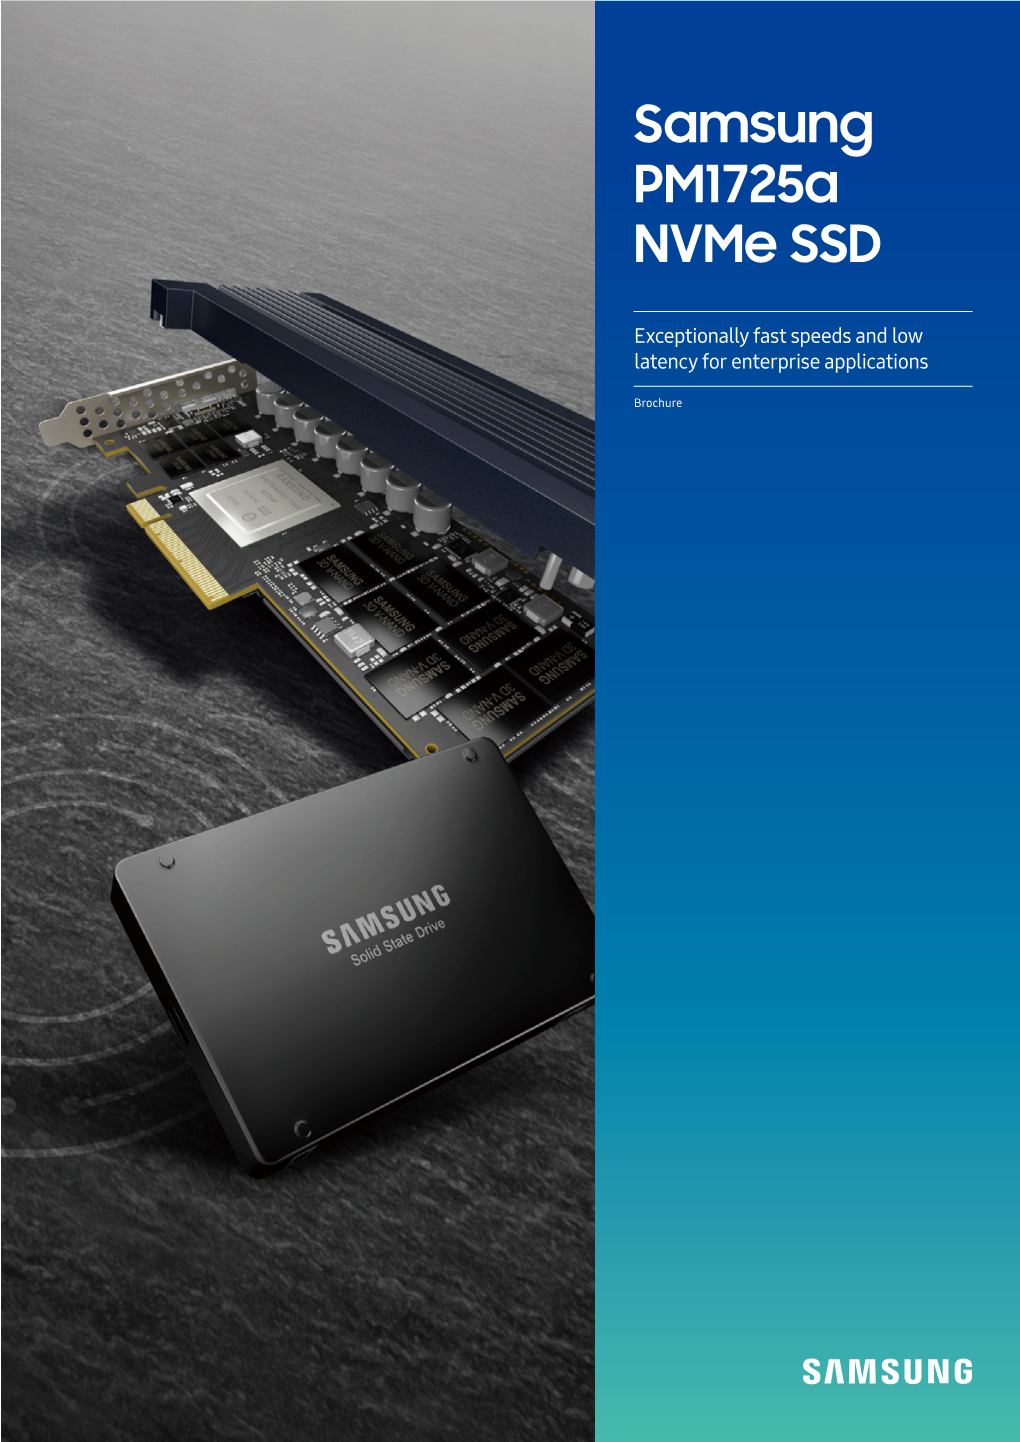 Samsung Pm1725a Nvme SSD